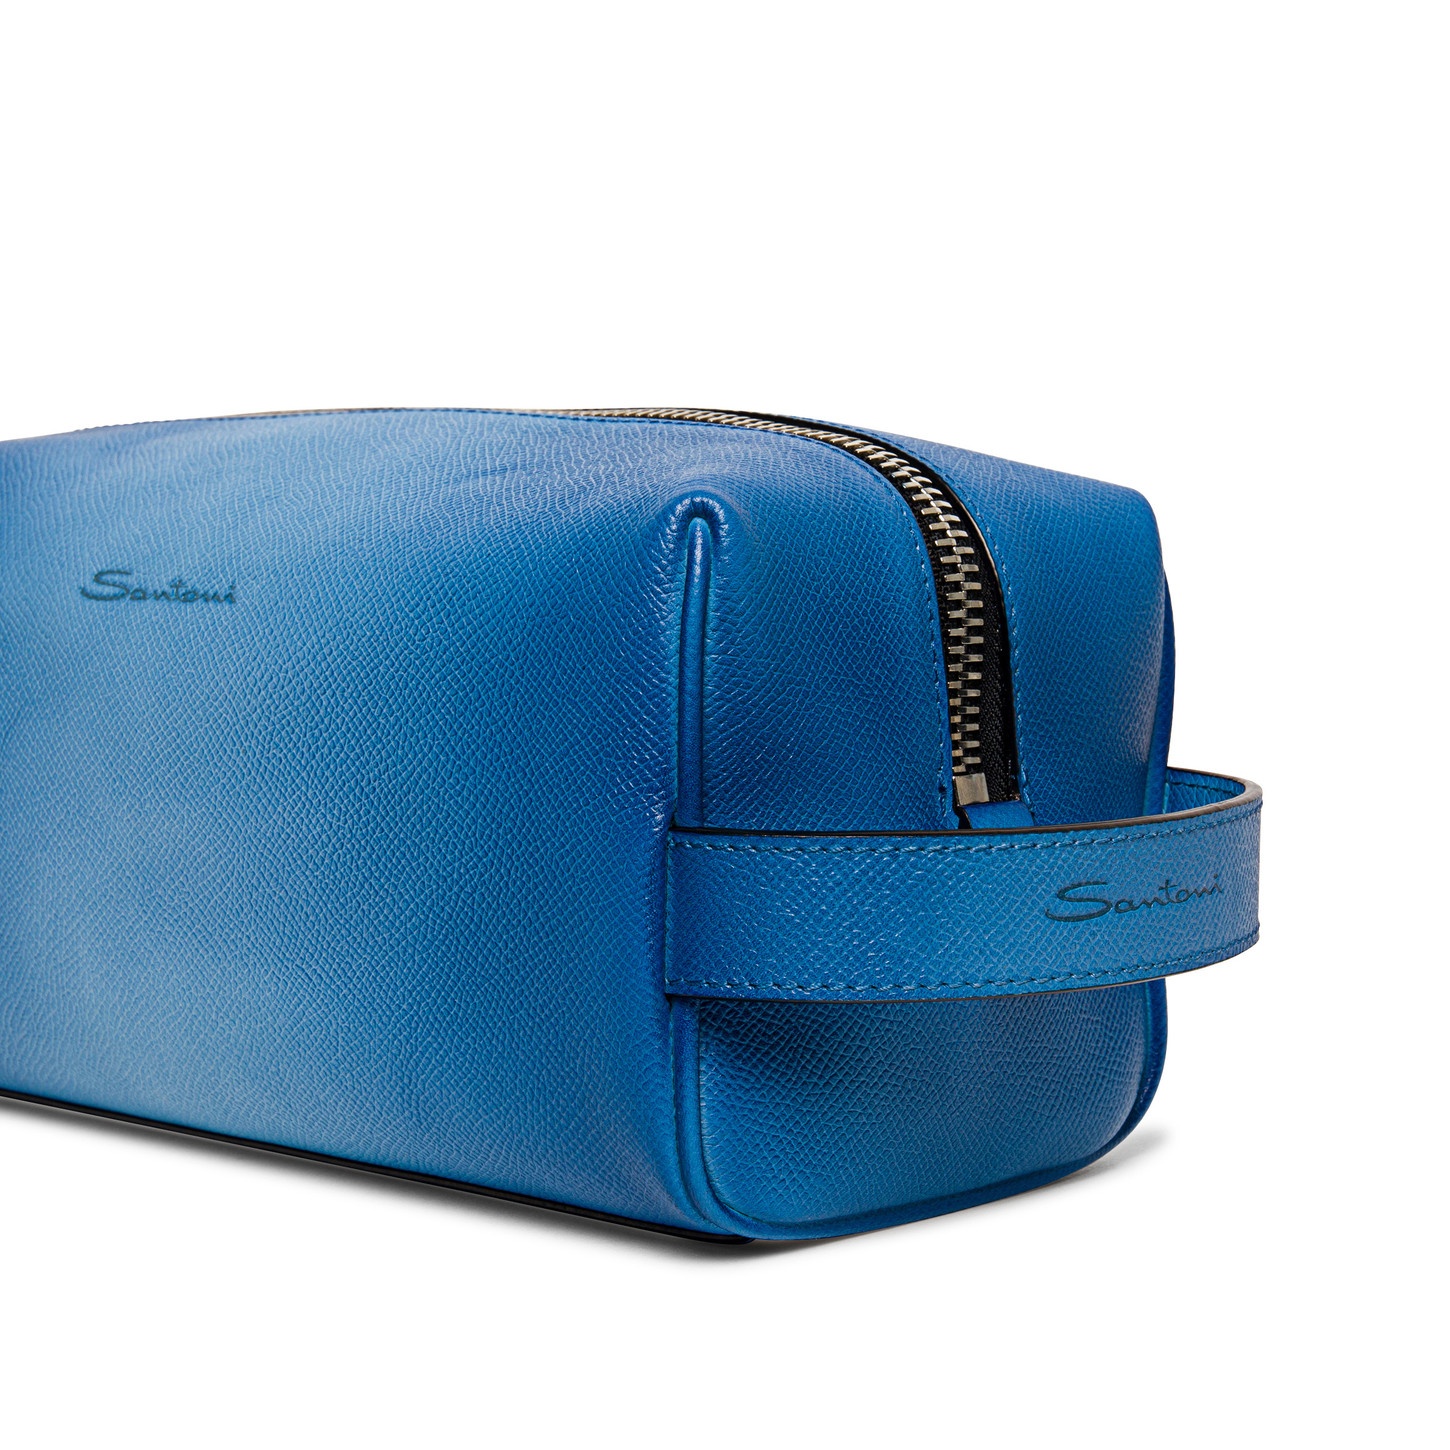 Light blue saffiano leather pouch - 4